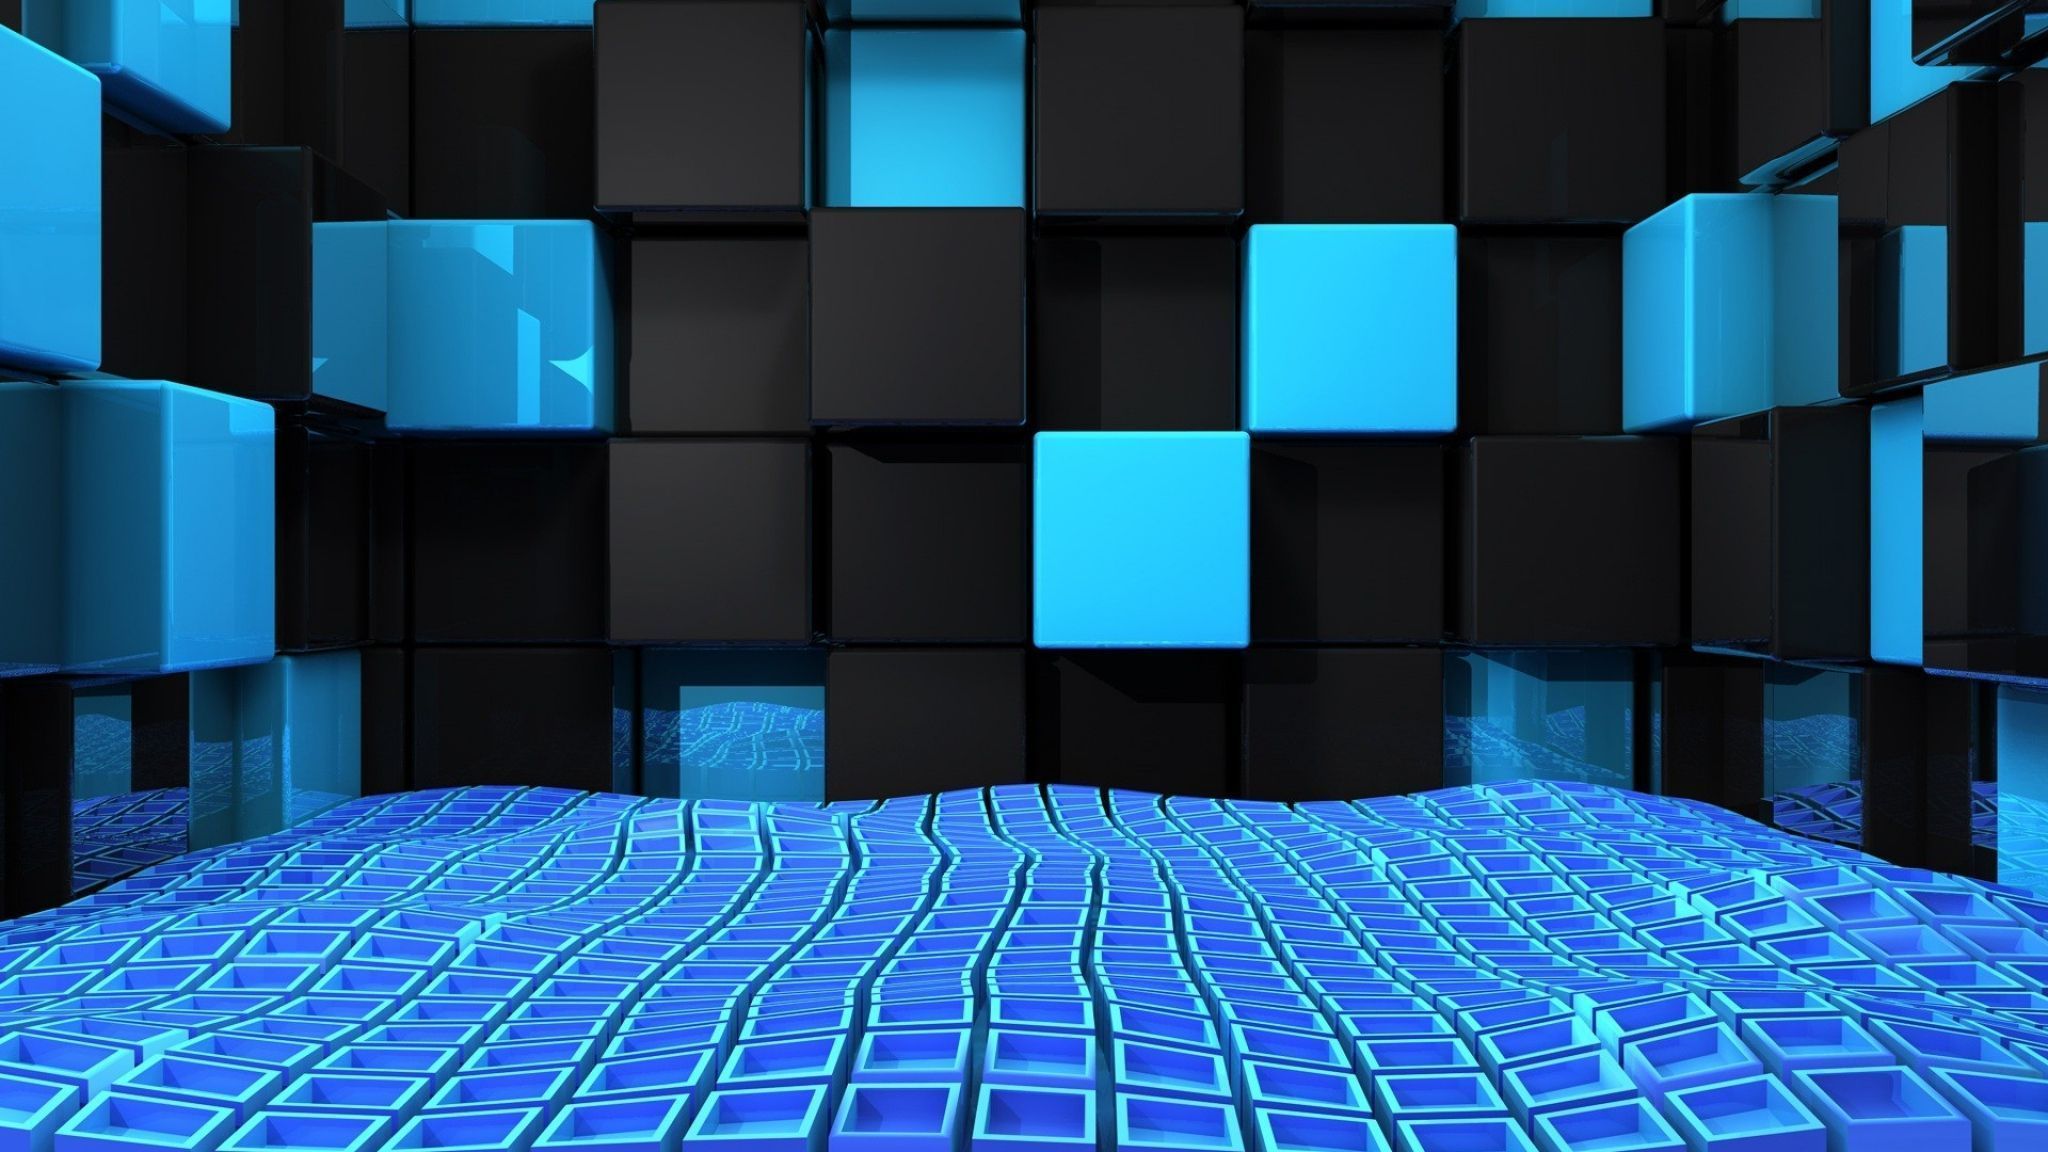 2048x1152 Download Wallpaper 2048x1152 Cube Squares Space Blue Black